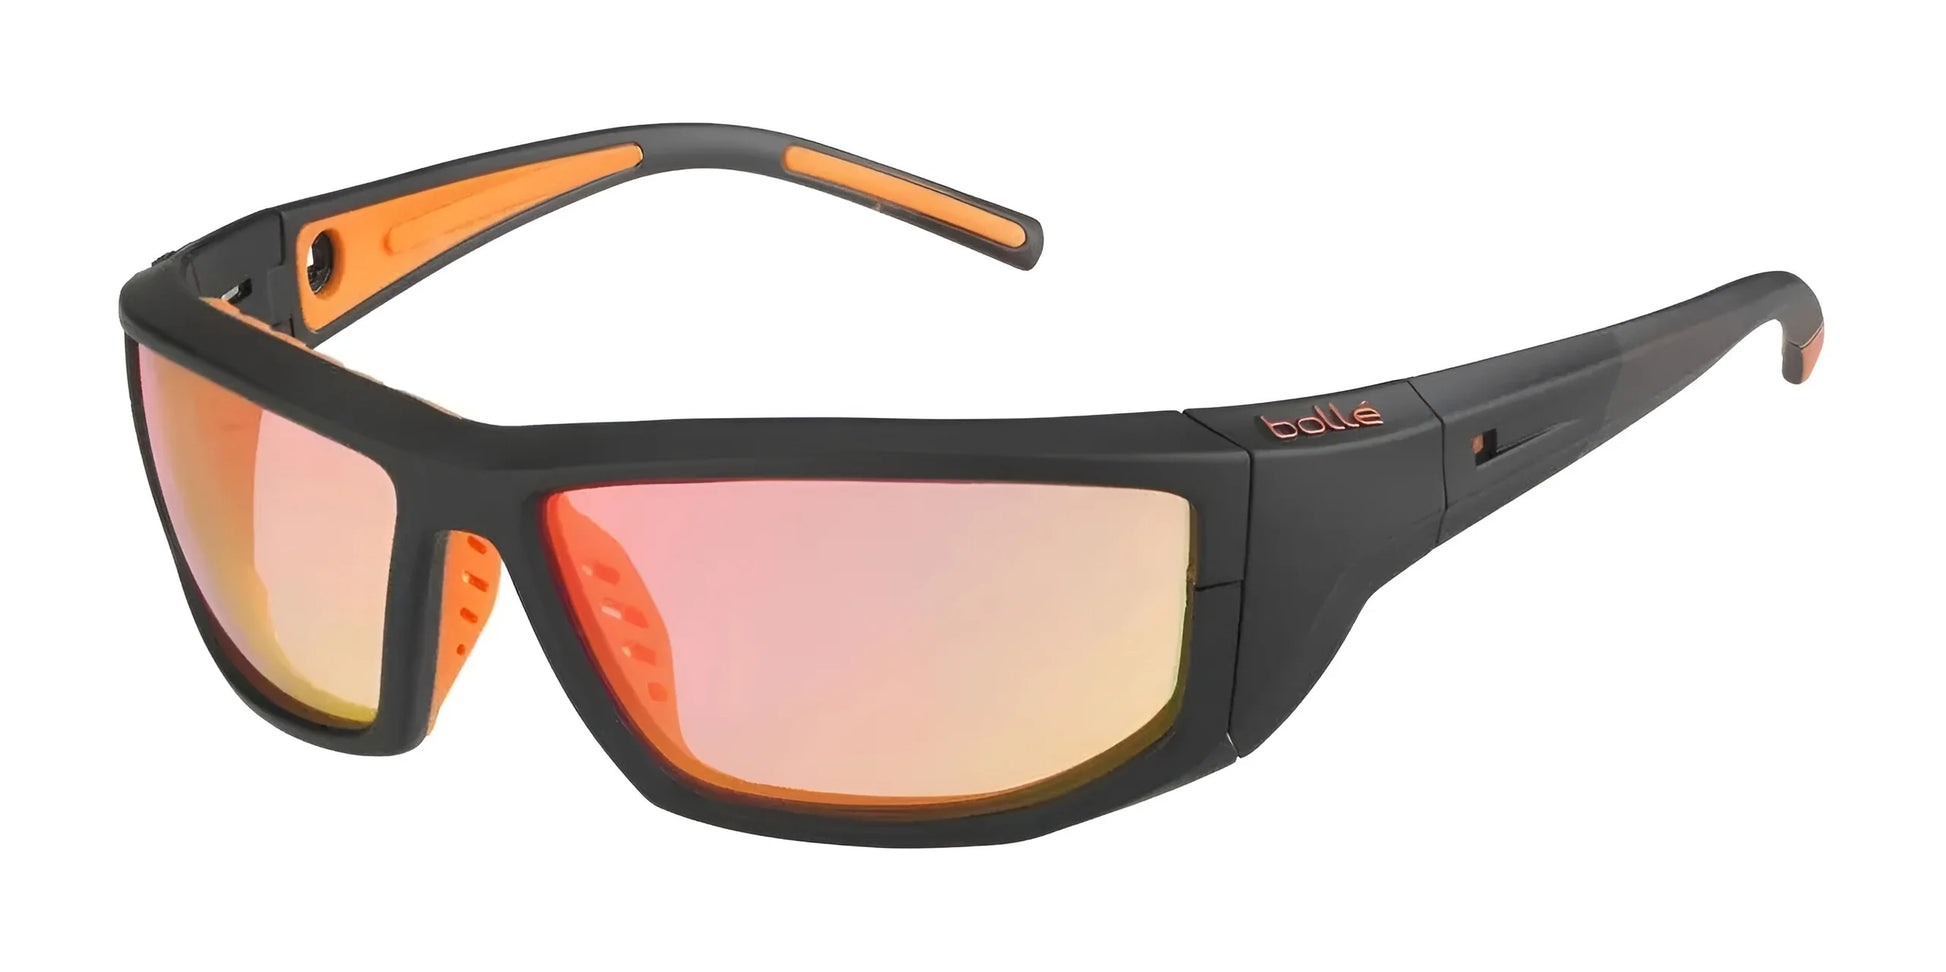 Bolle Playoff Safety Glasses Black Orange Matte / Photochromic PC Flash Fire AF